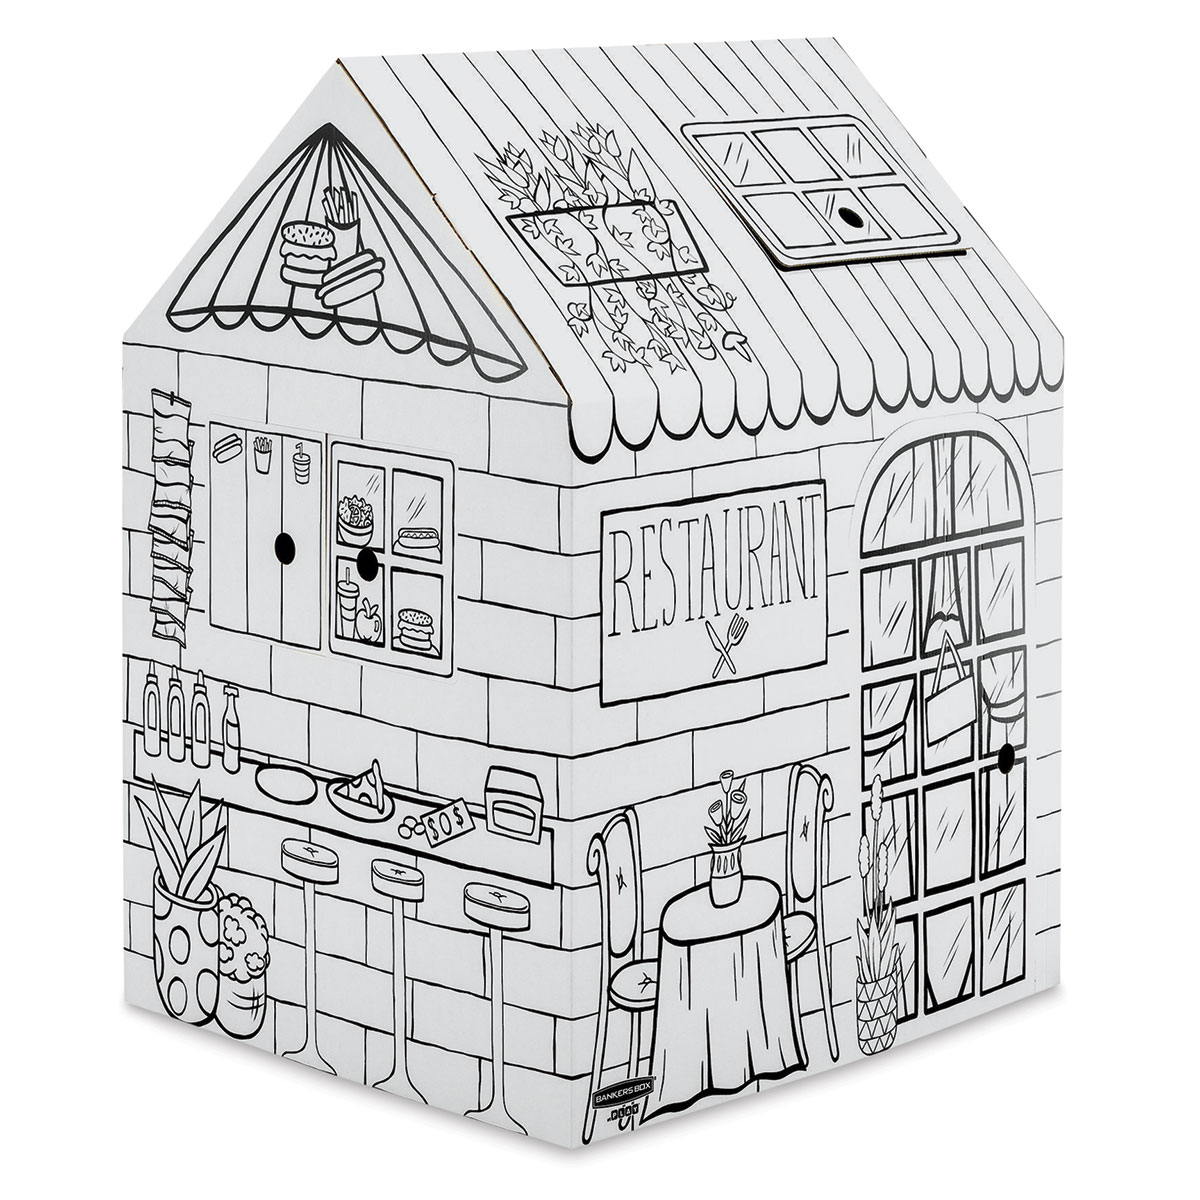 Bankers Box Cardboard Playhouse - Treats-N-Eats